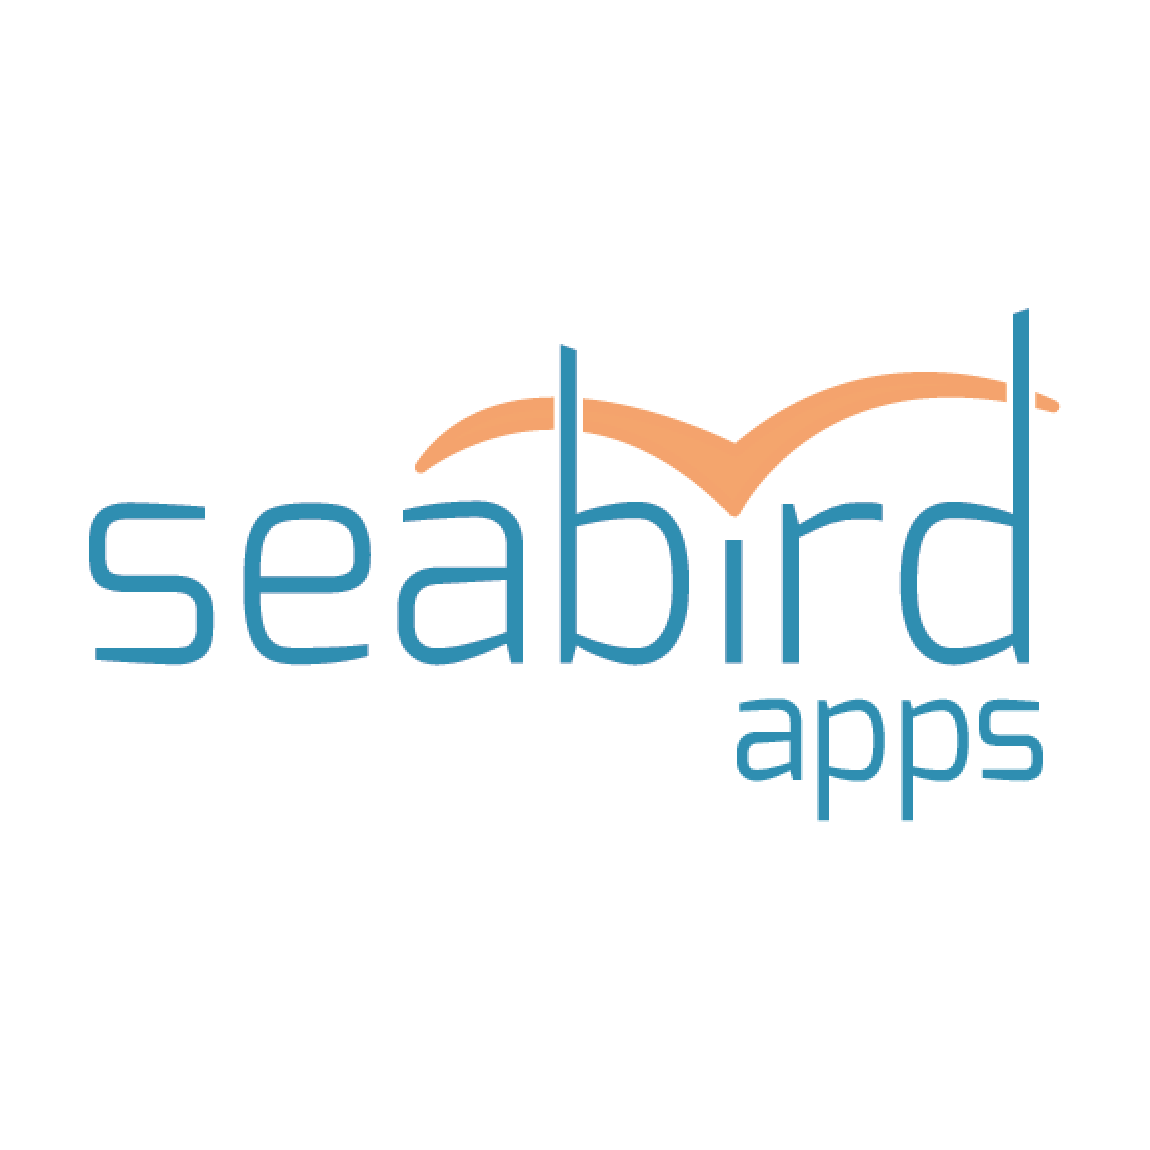 Seabird Apps